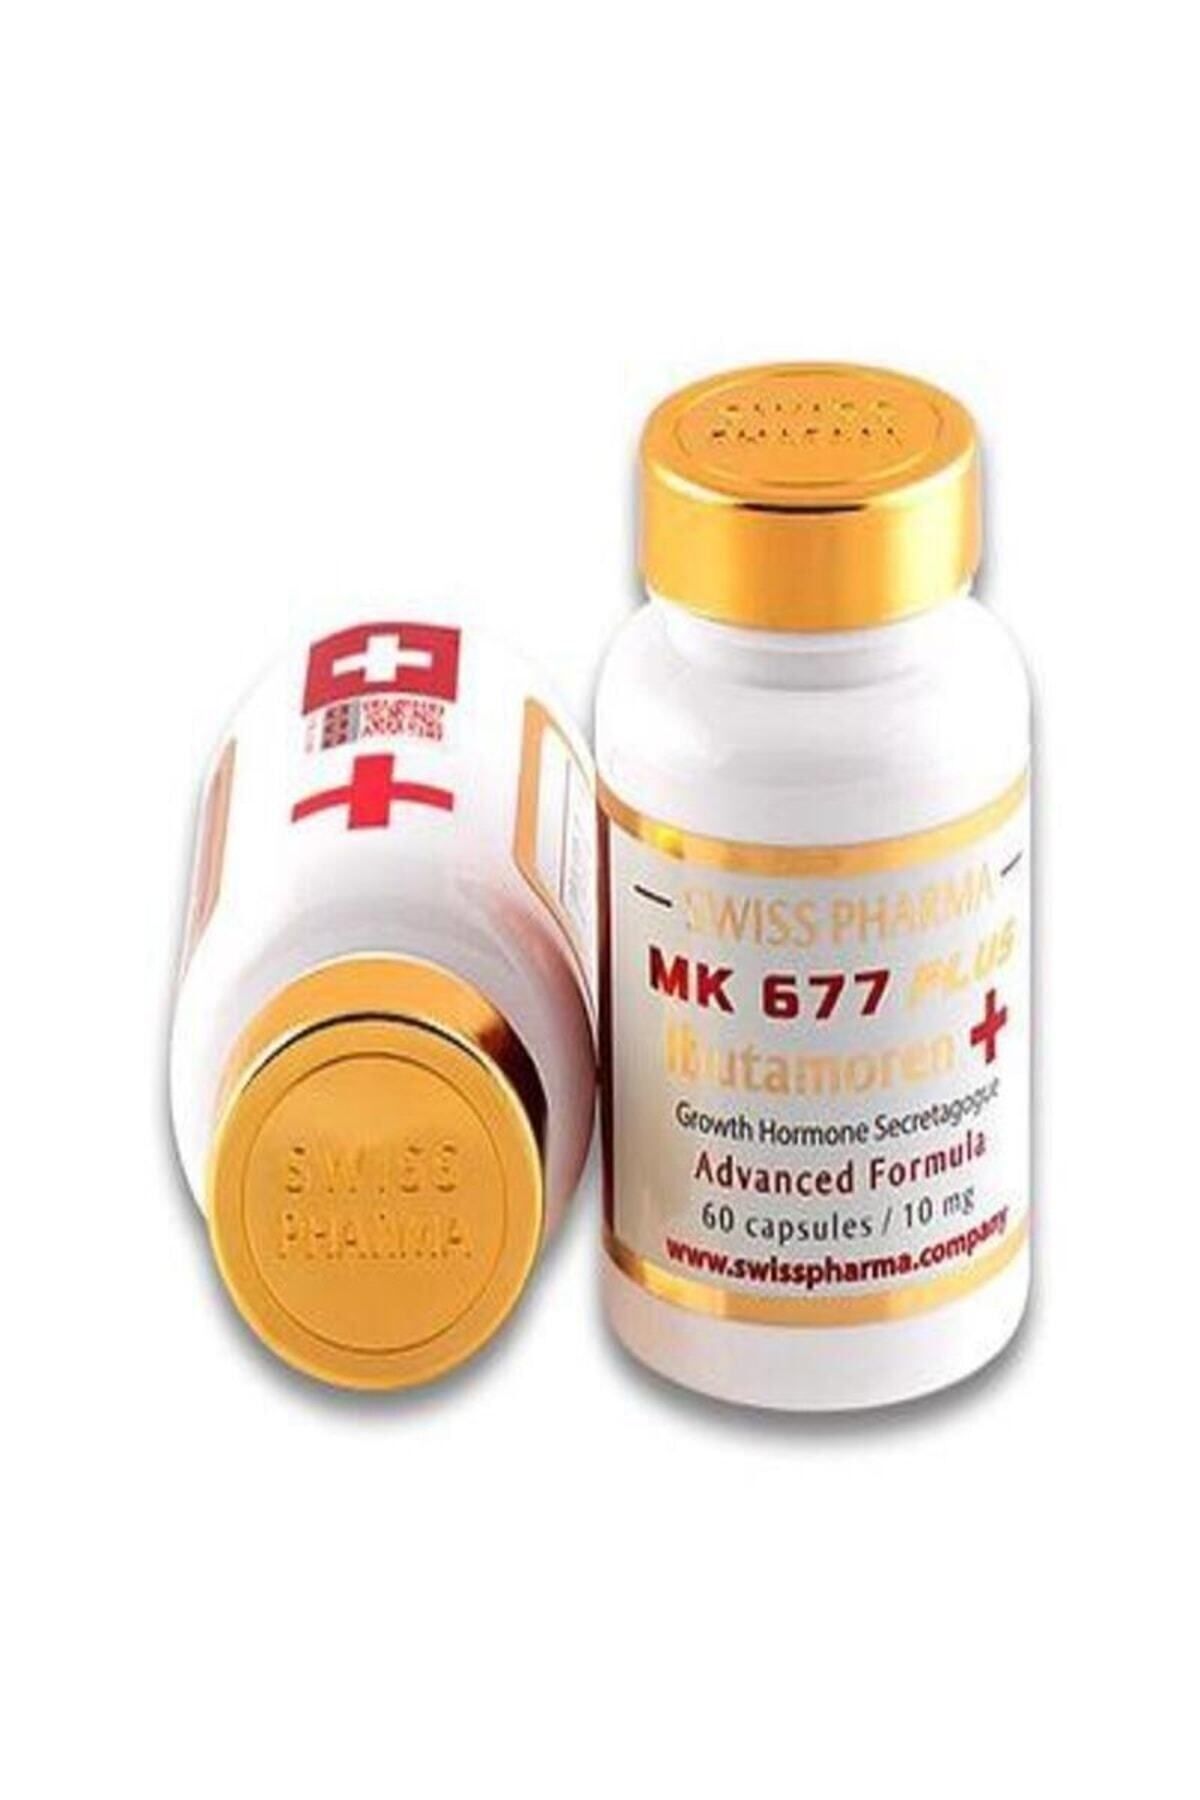 swiss pharma Sarms Mk-677 Ibutamoren 60 Tablet / 10 Mg